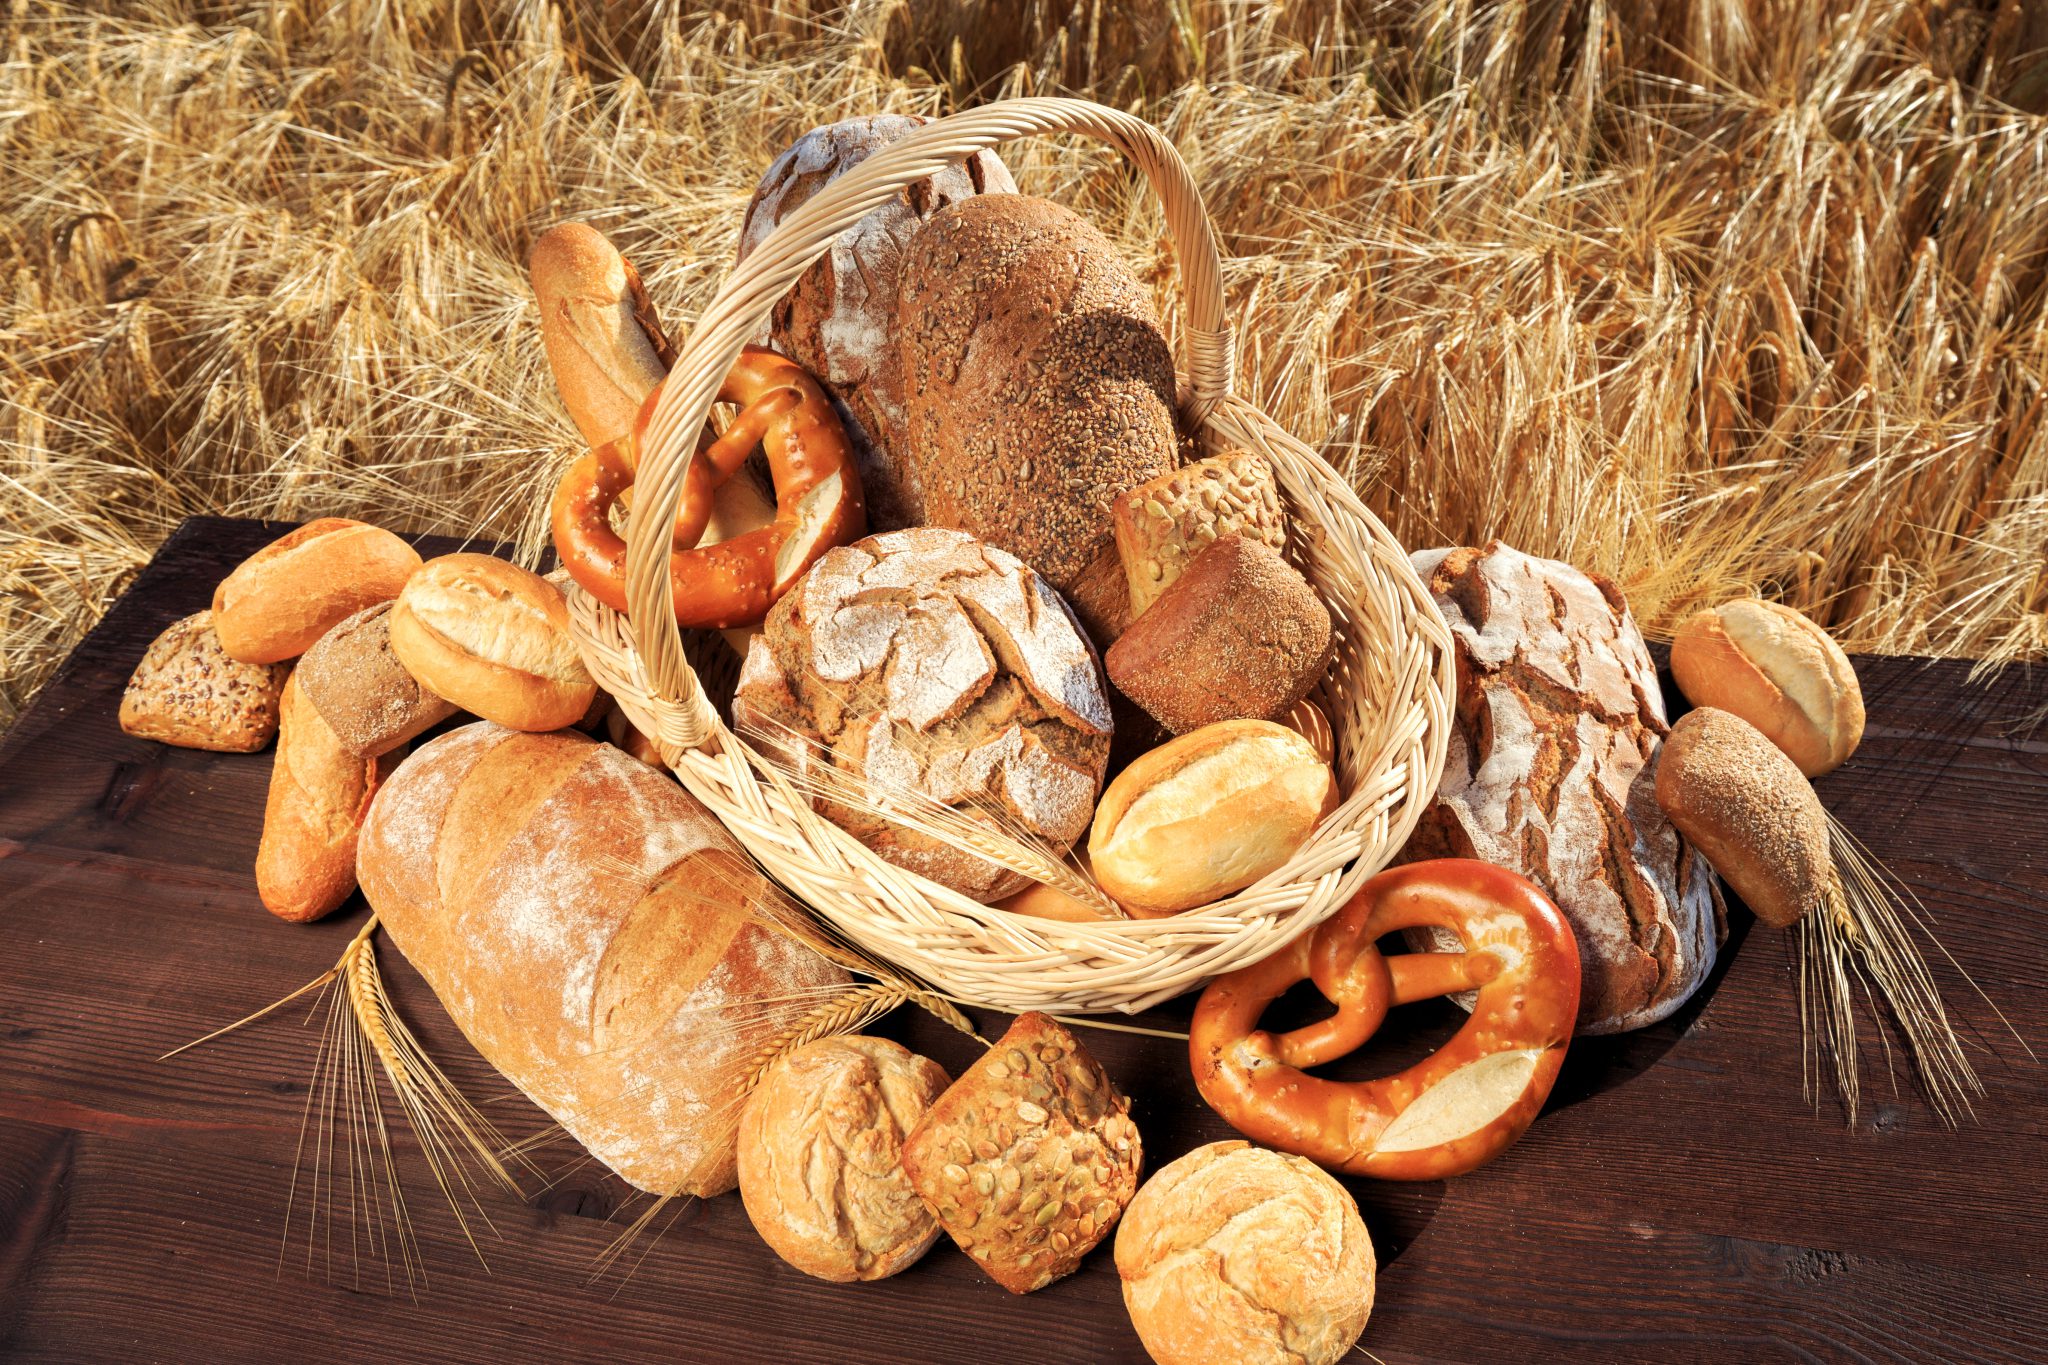 Brotsorten: Die beliebtesten Brote im Überblick - Brotbackautomat.org